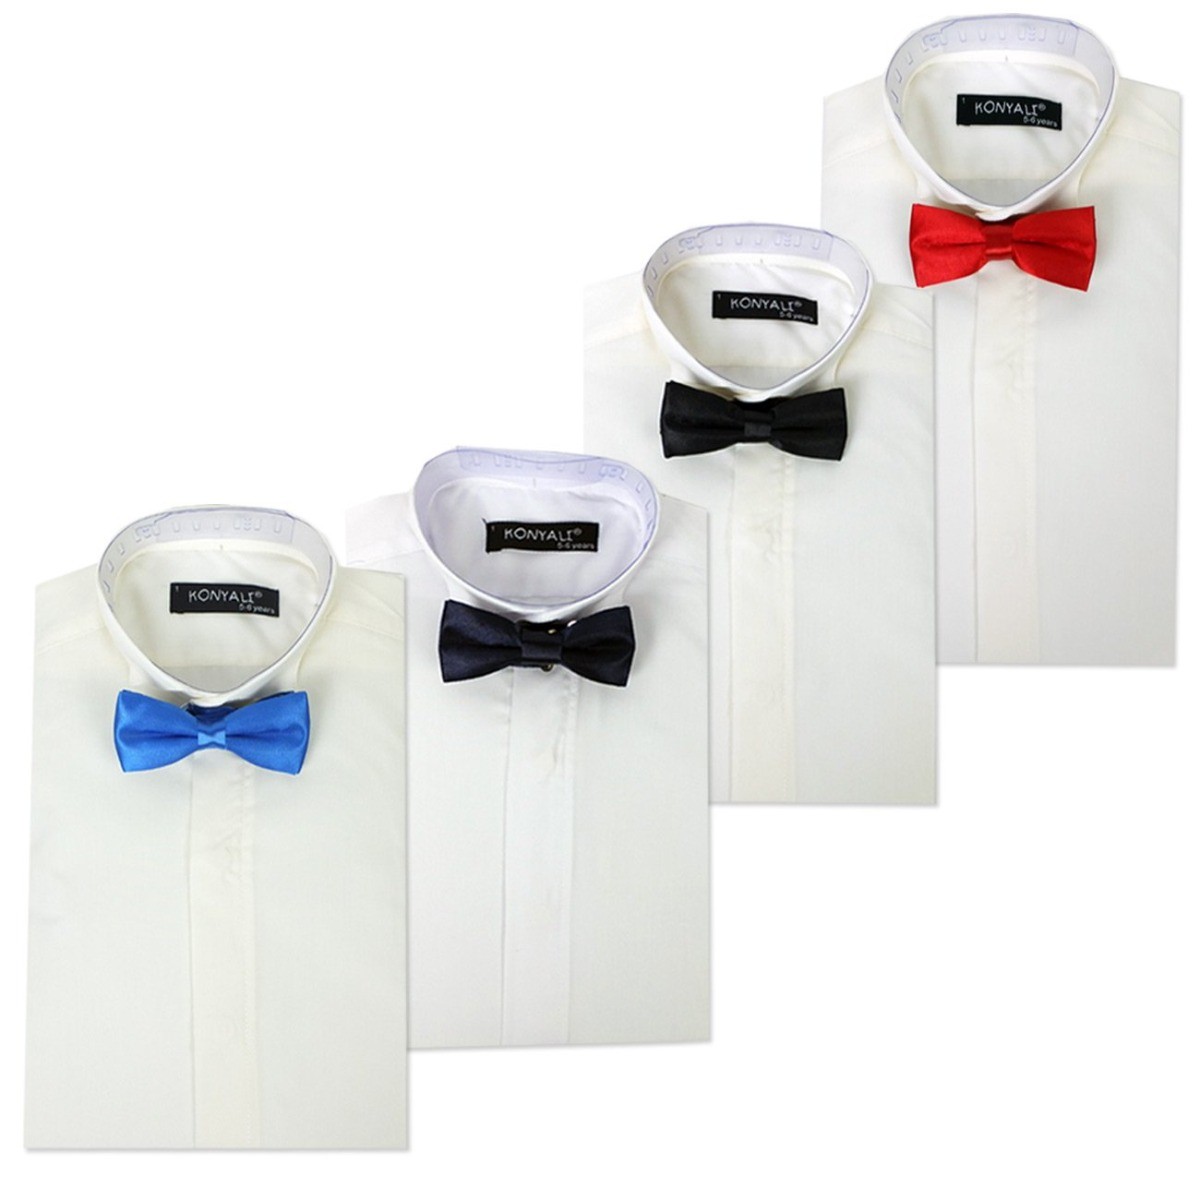 Boys Wing Collar Tuxedo Suit Shirt & Bow Tie Set